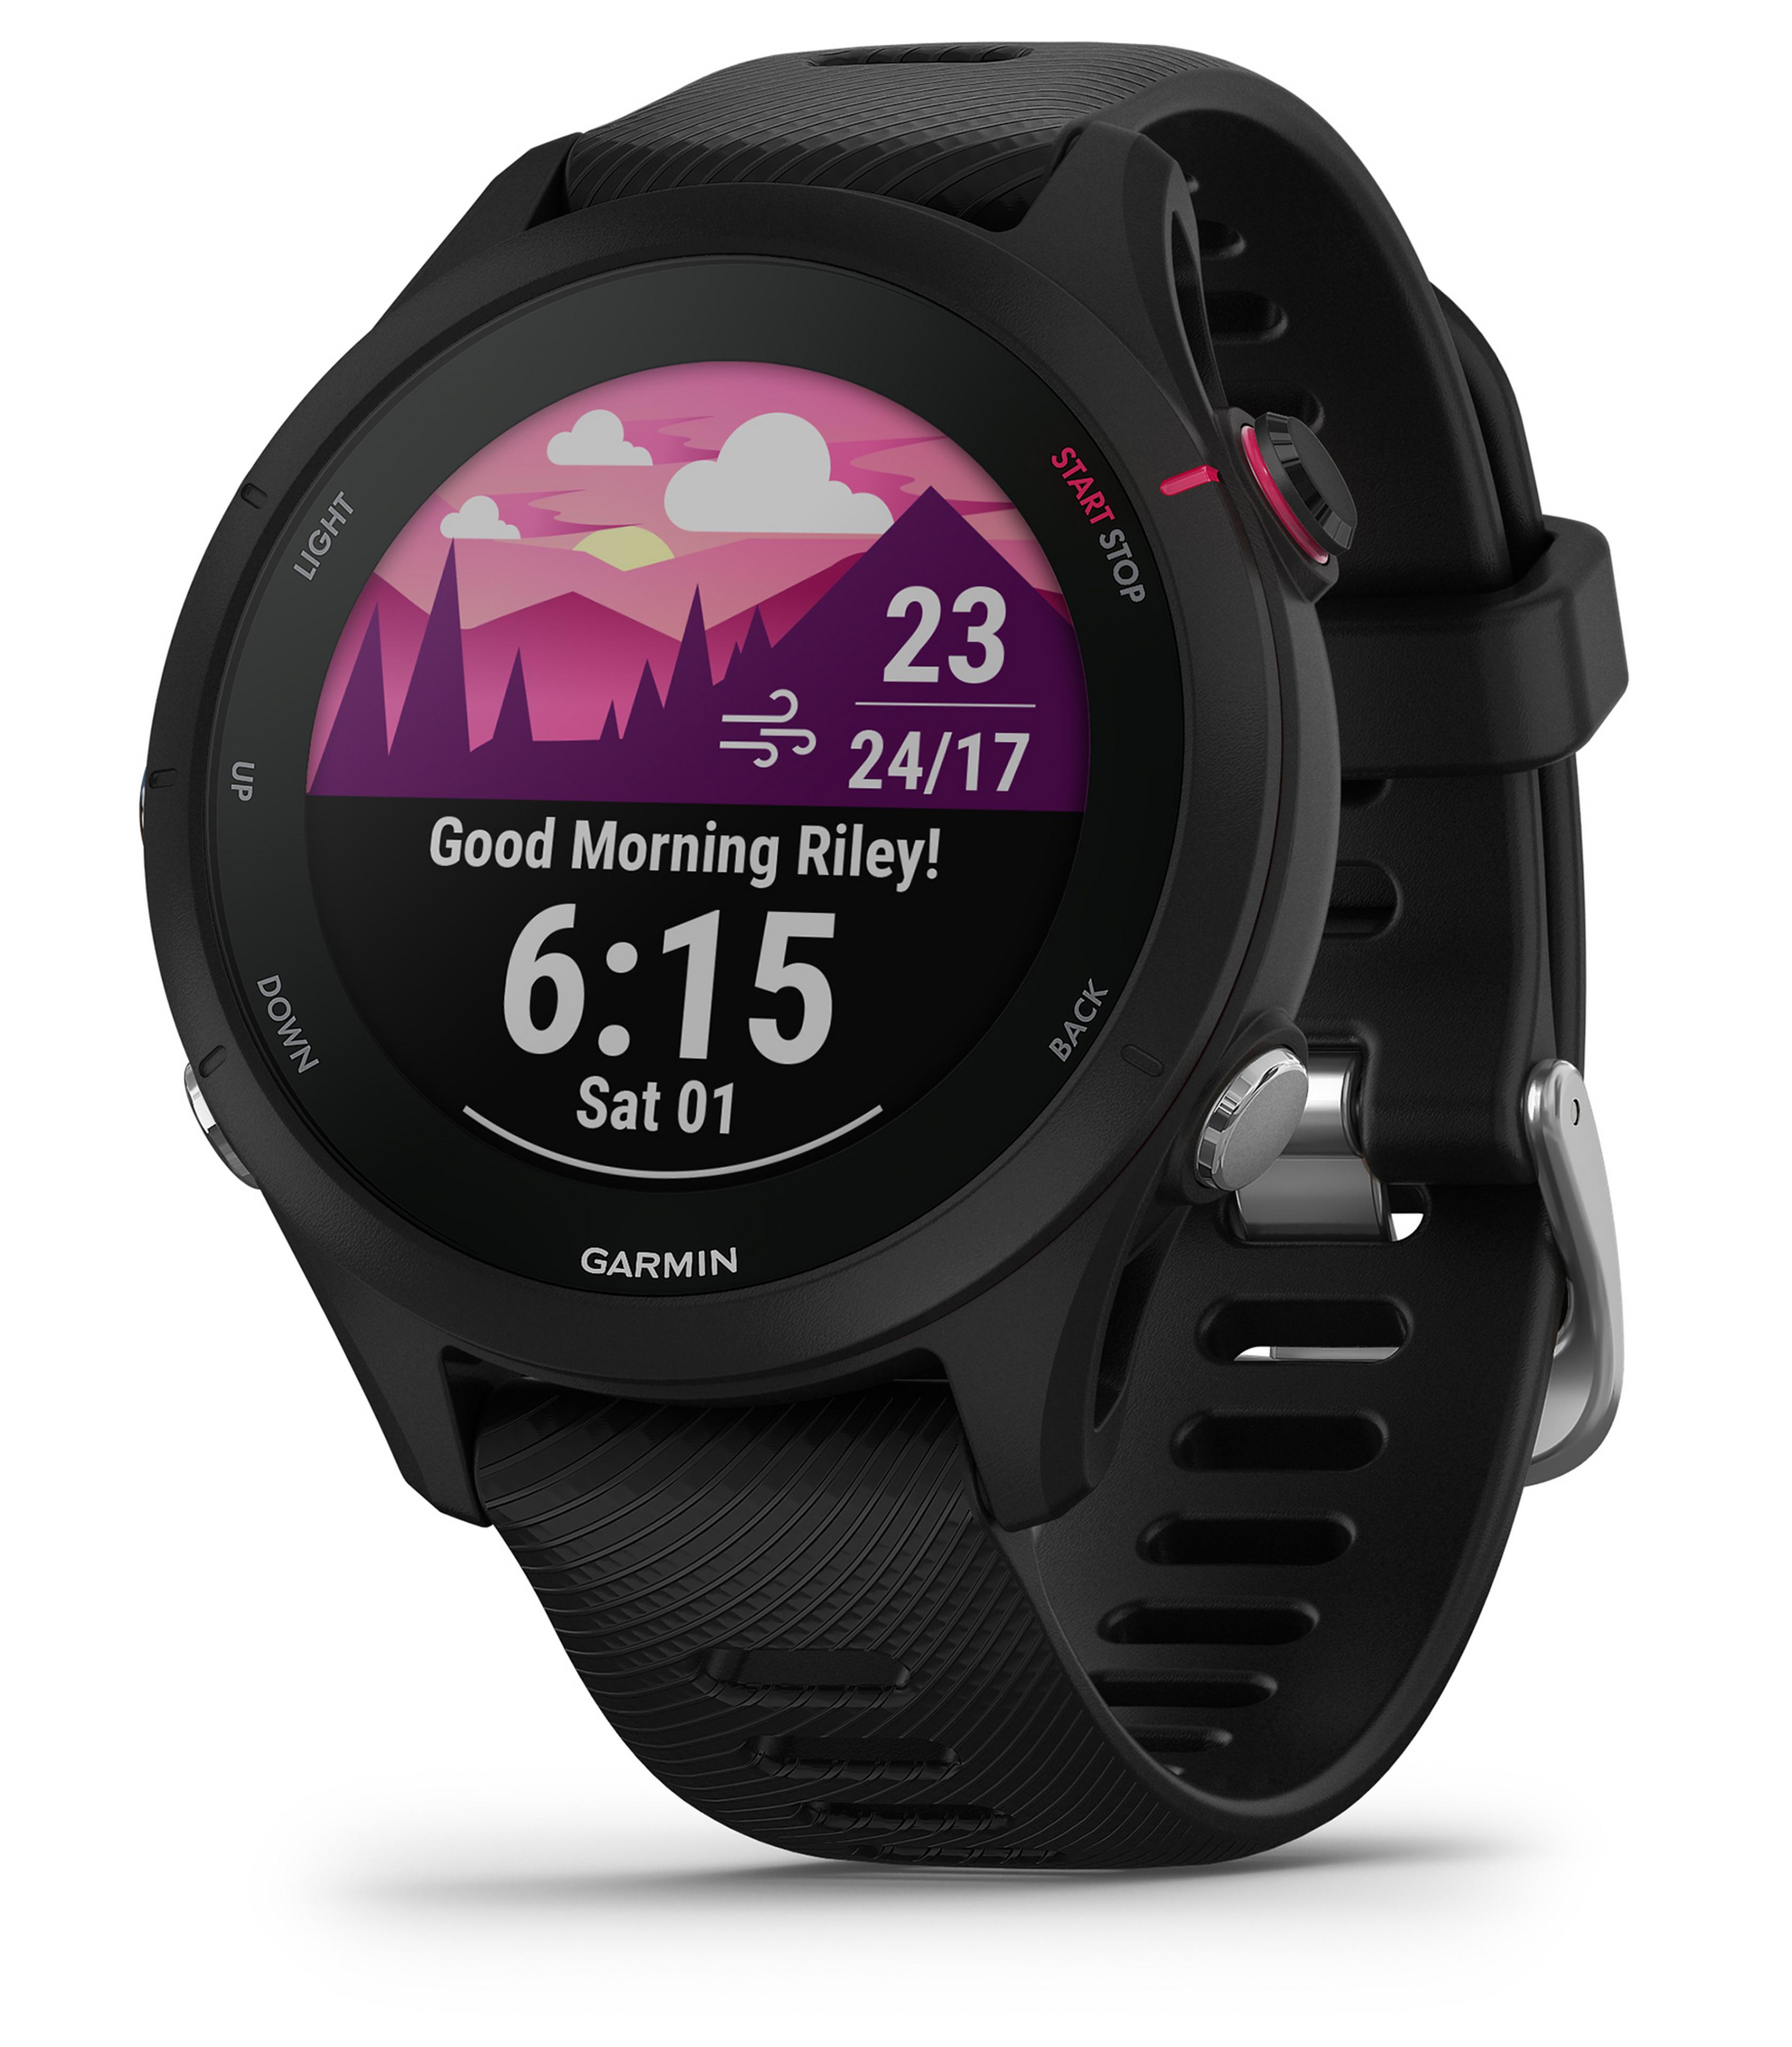 GARMIN-FORERUNNER 245 MUSIC BLACK - Cardio GPS watch